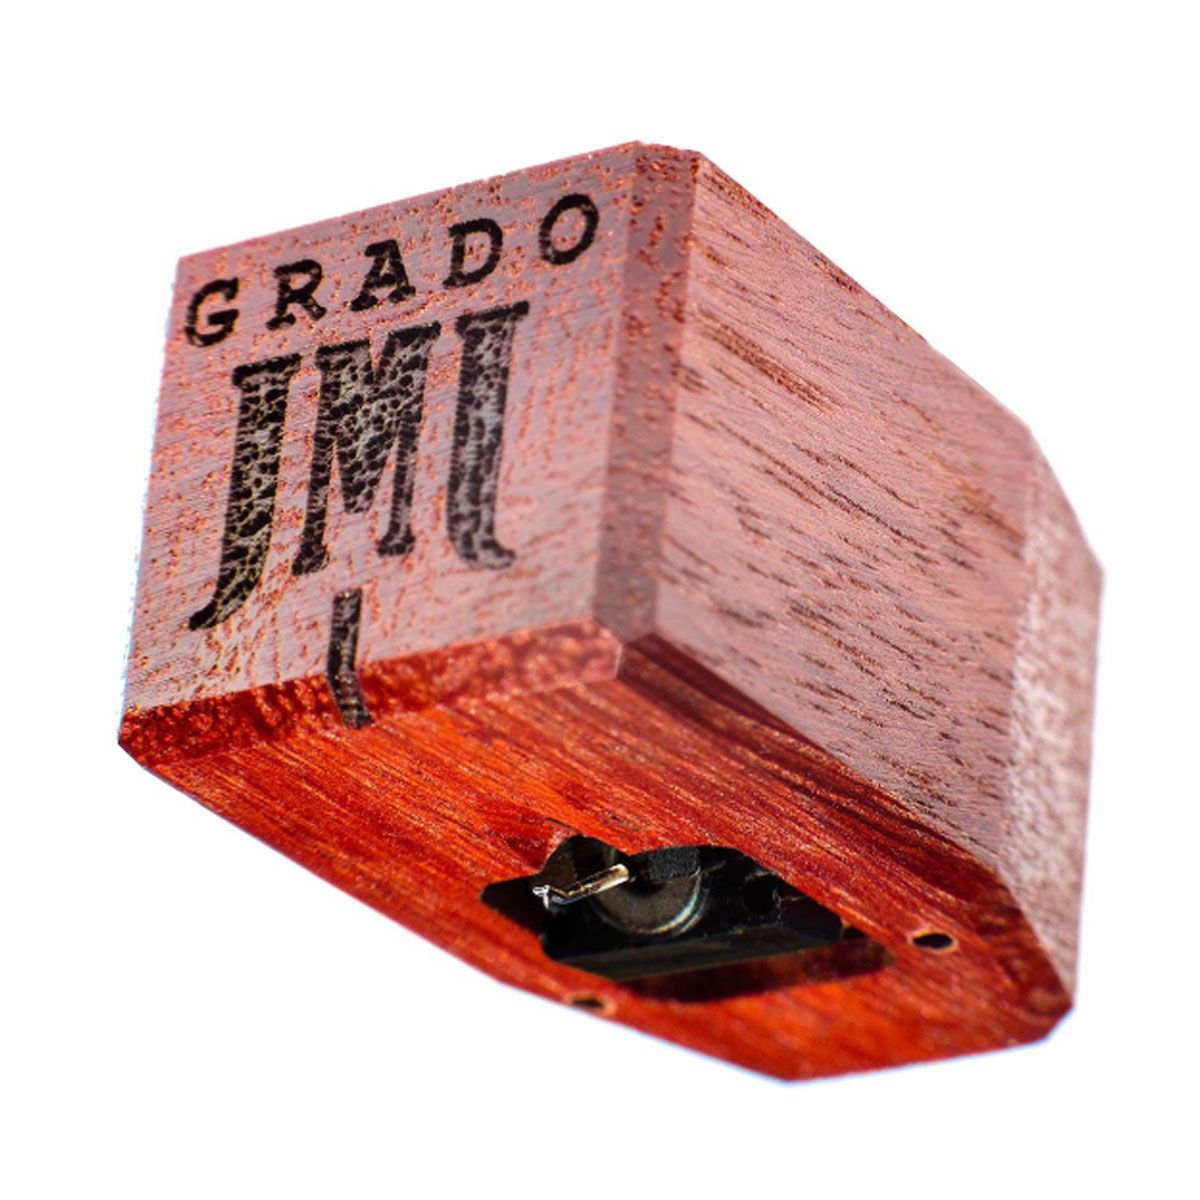 Grado Statement3 Phono Cartridge - Low Output, front view
